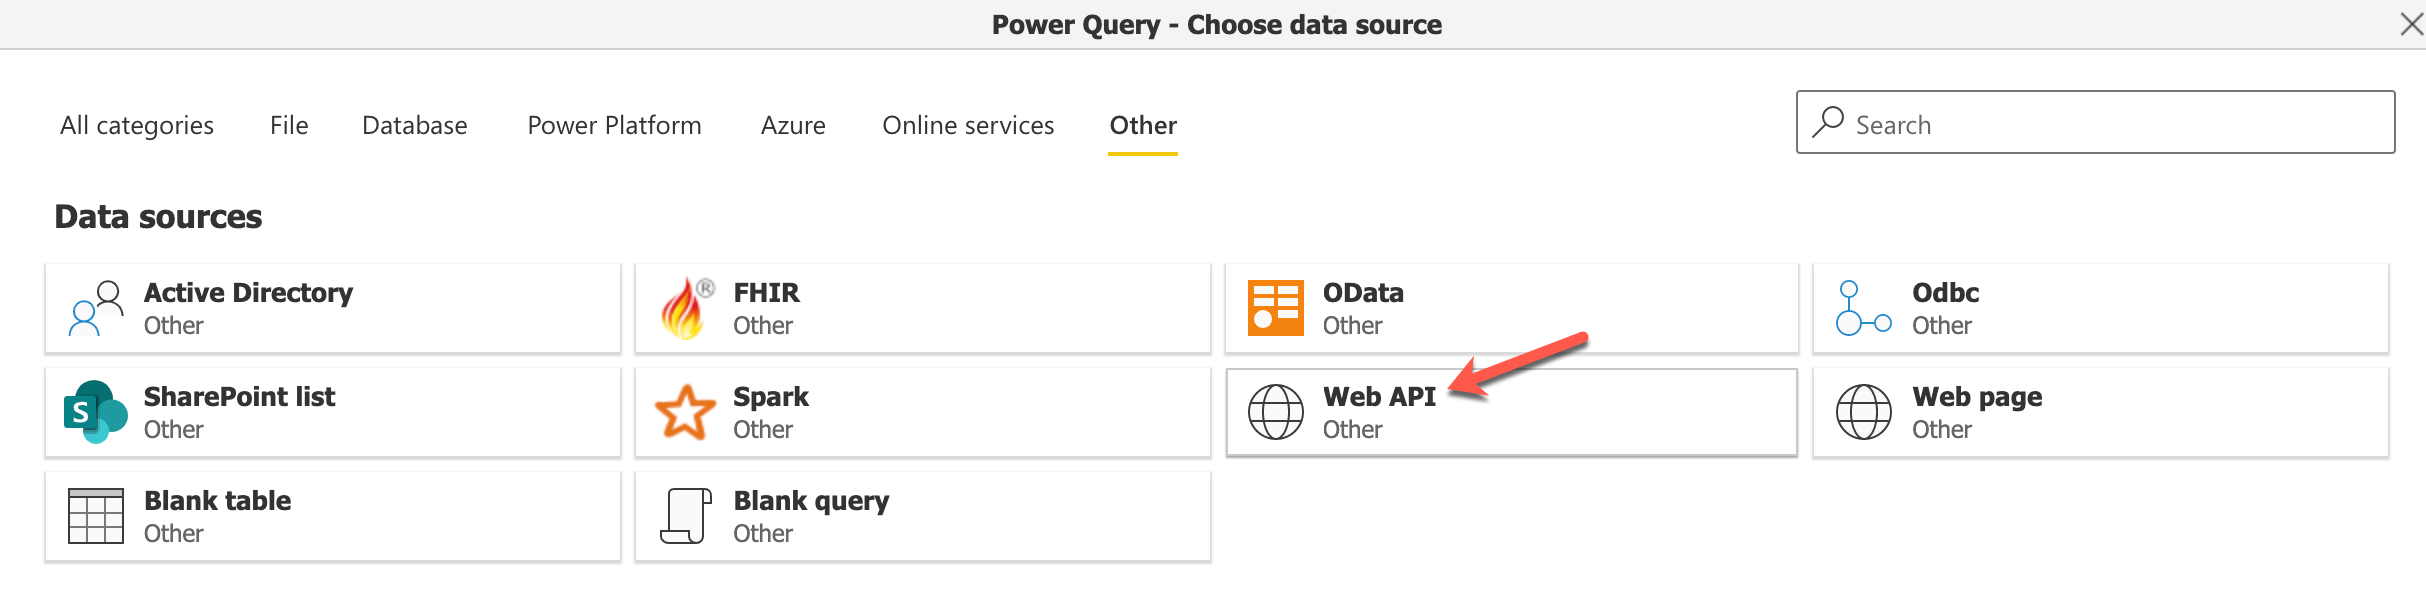 Selecting Web API as the data source